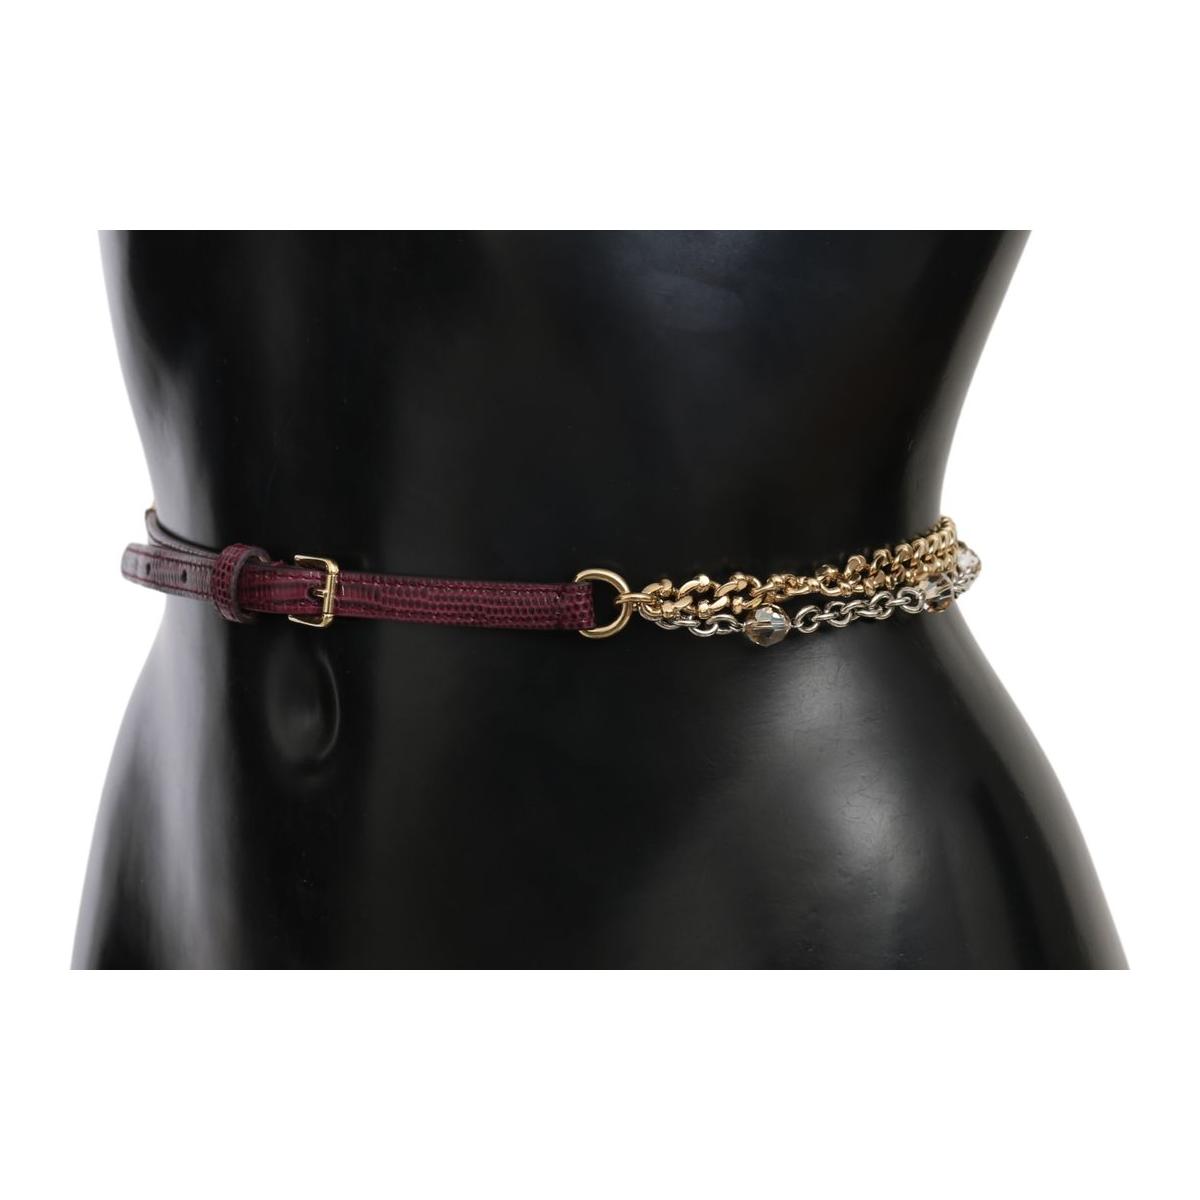 Dolce & Gabbana Crystal Studded Waist Belt in Purple purple-leather-gold-chain-crystal-waist-belt Belt IMG_9980-3b6d66e9-802.jpg